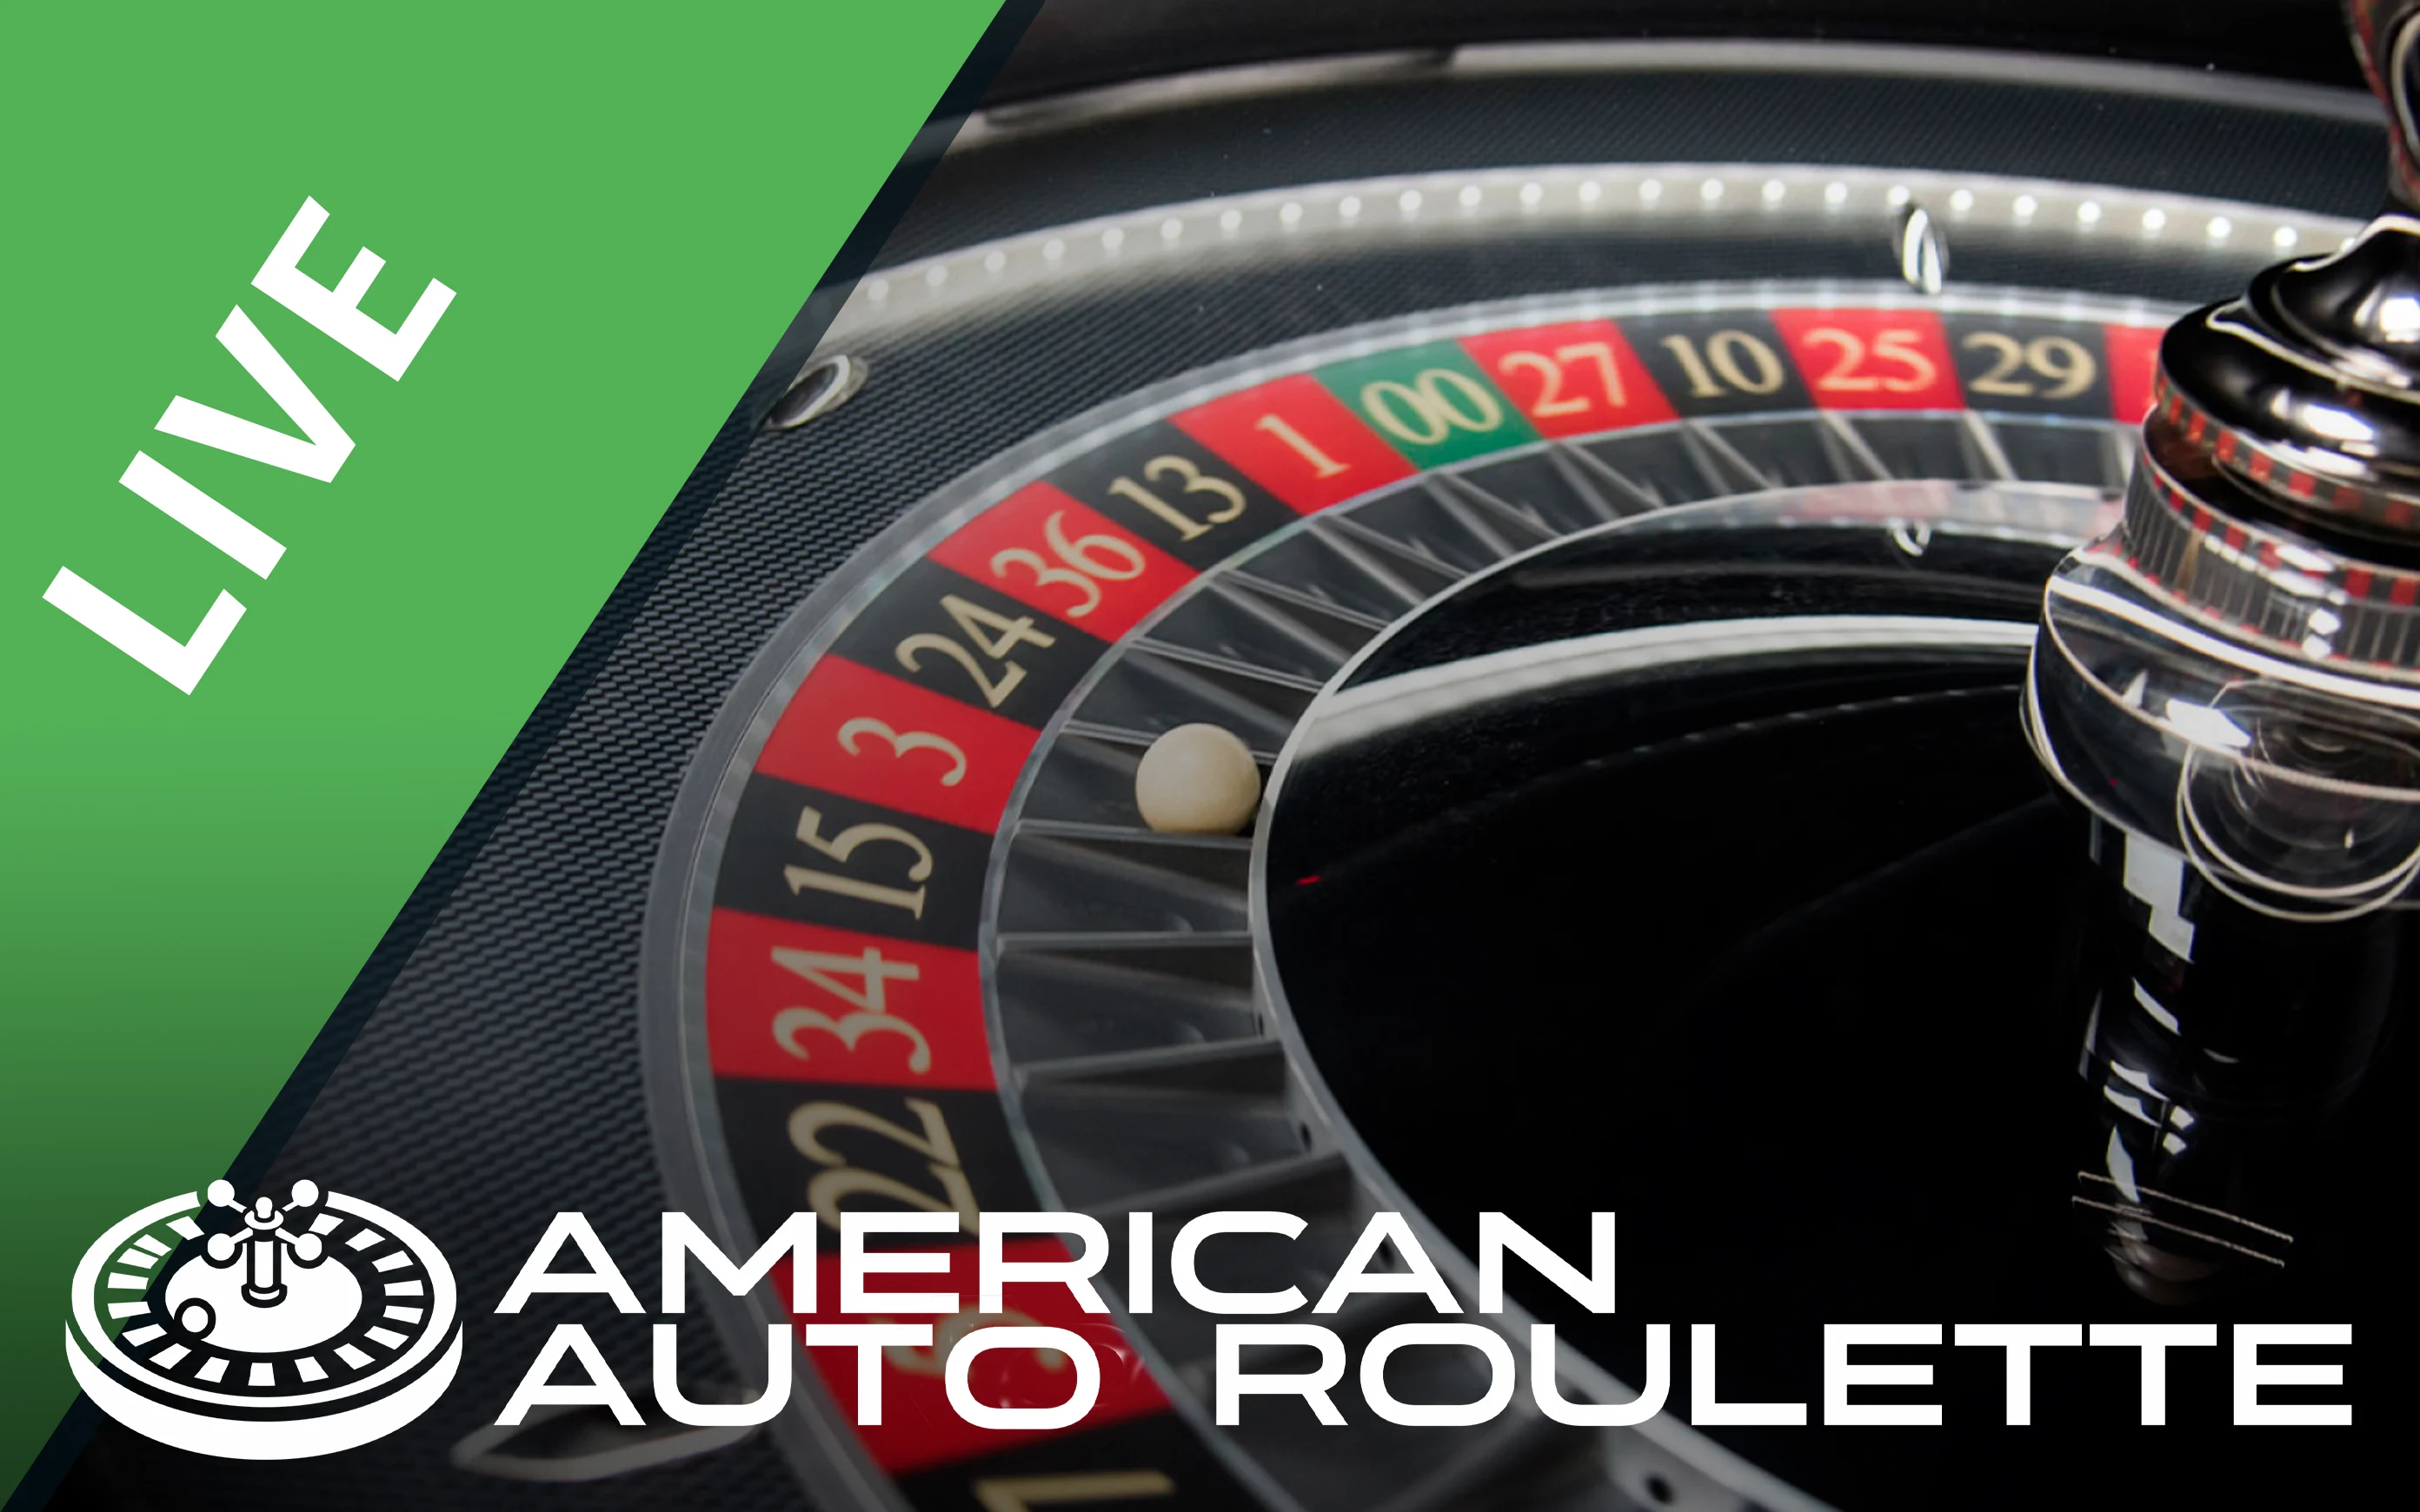 Speel American Auto Roulette op Starcasino.be online casino